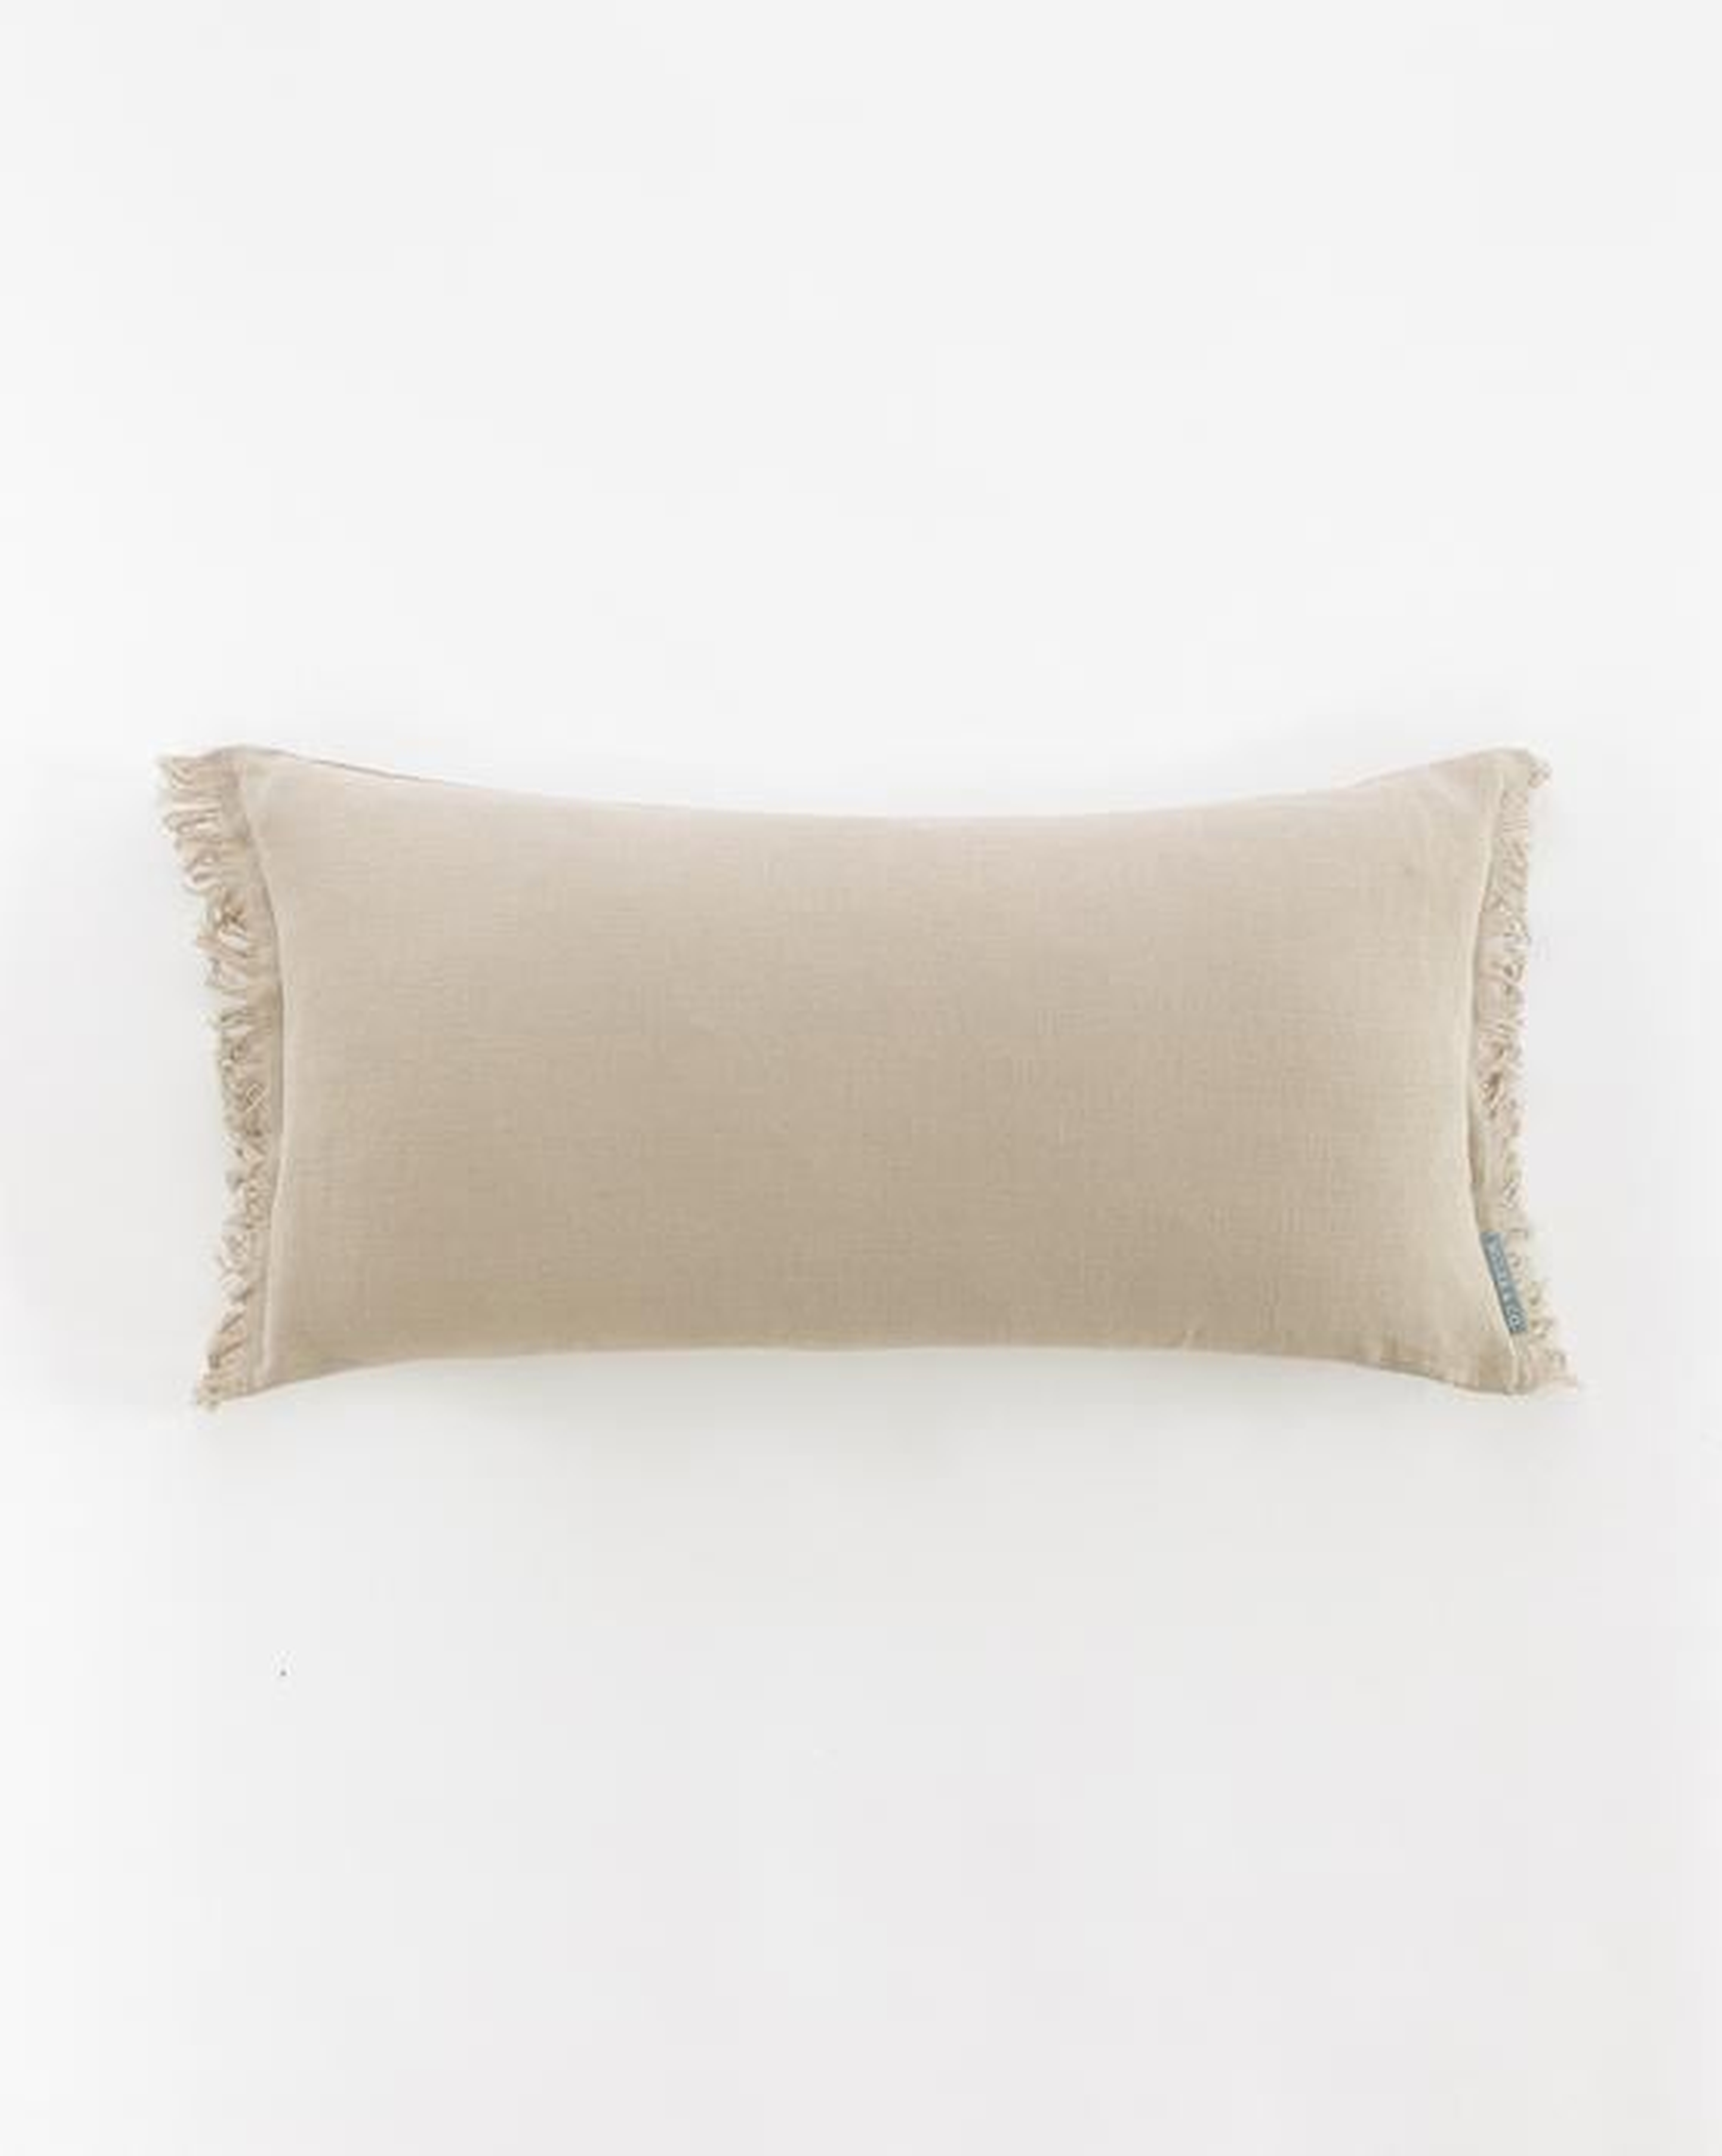 Hazelton Fringed Pillow Cover, Mushroom, 24" x 12" - McGee & Co.